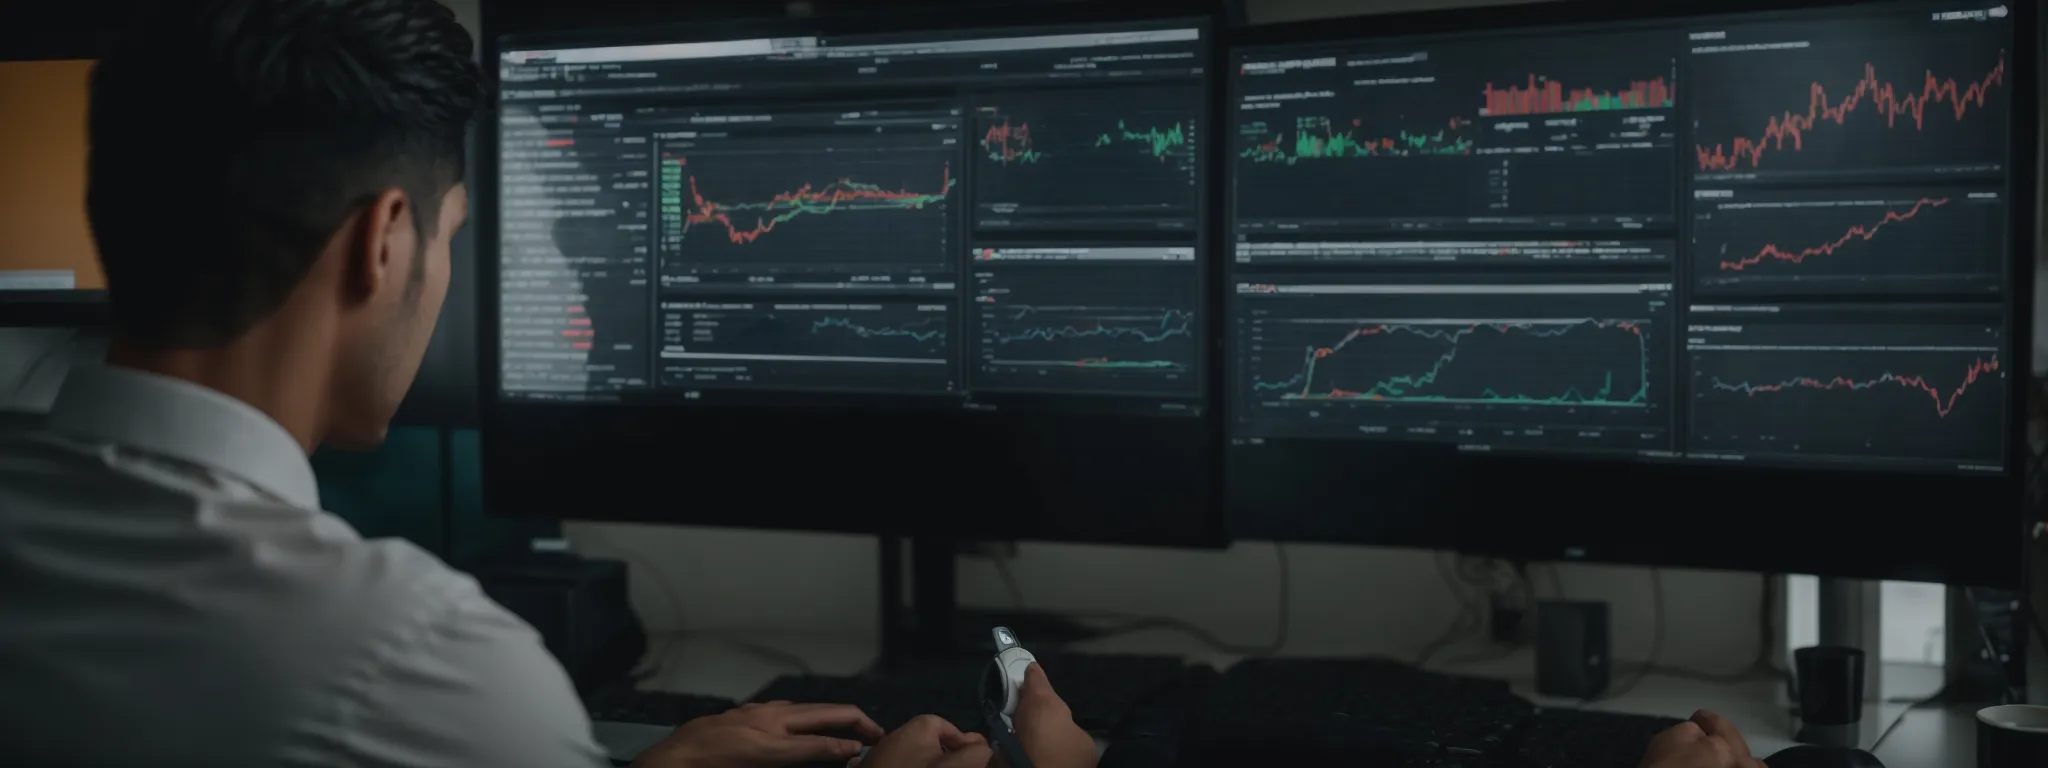 a digital marketer observes an analytics dashboard on a computer screen, revealing trending keywords and seo performance metrics.